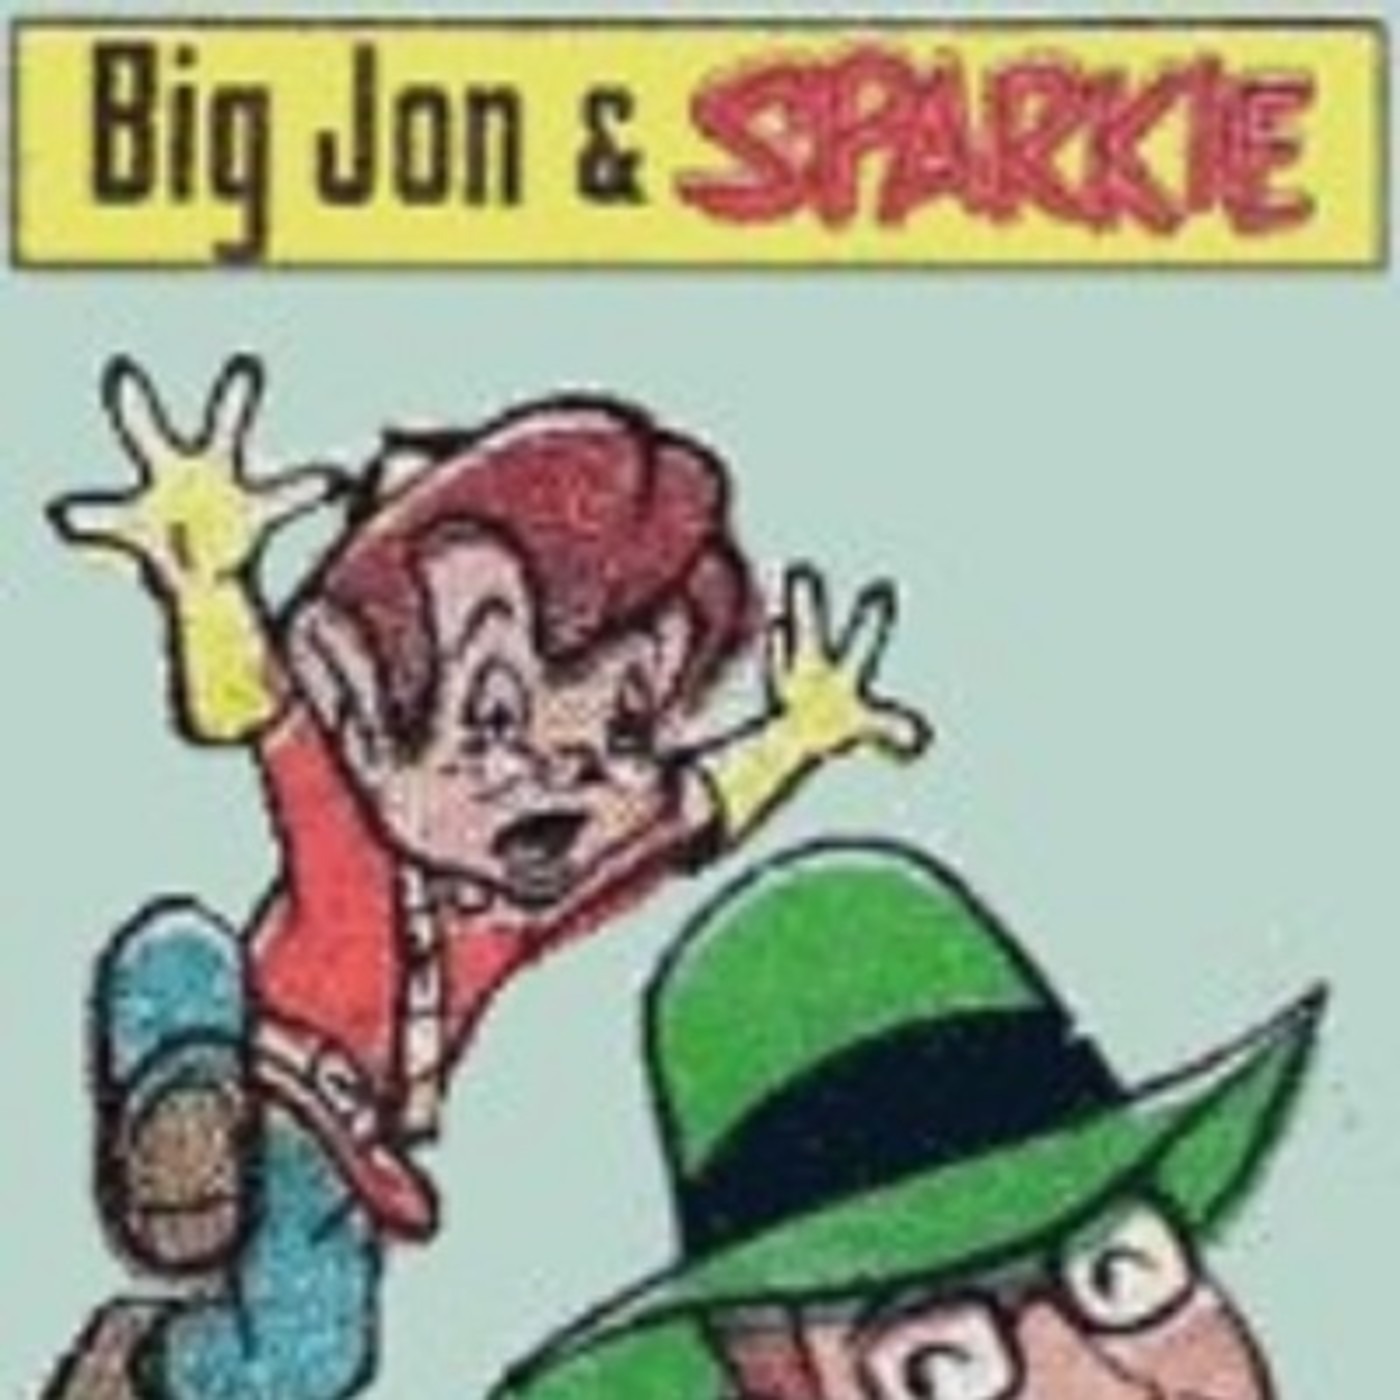 Big John and Sparkie